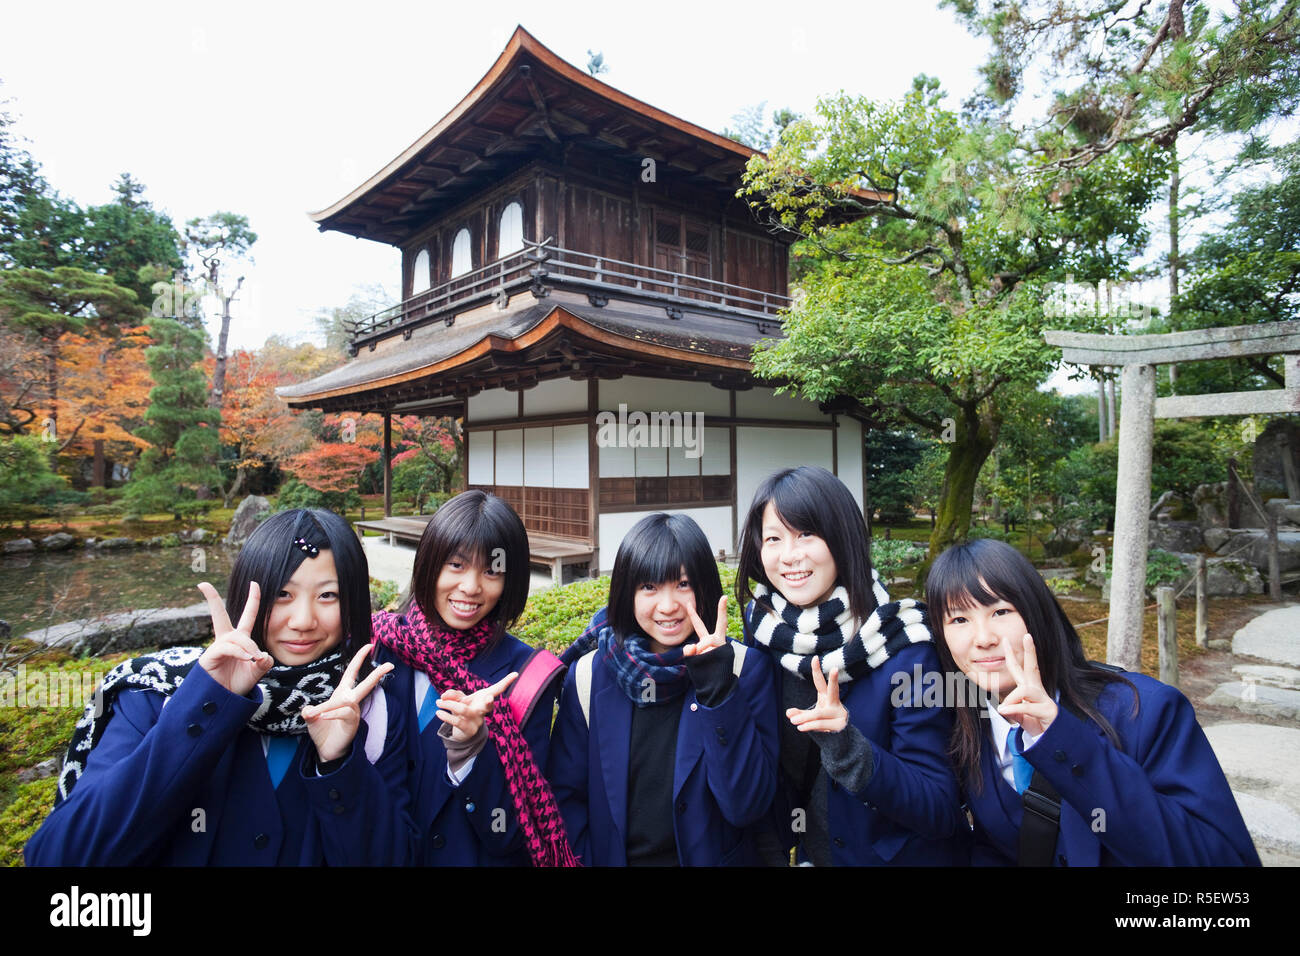 Japan School Girls Stock Photos & Japan School Girls Stock ...